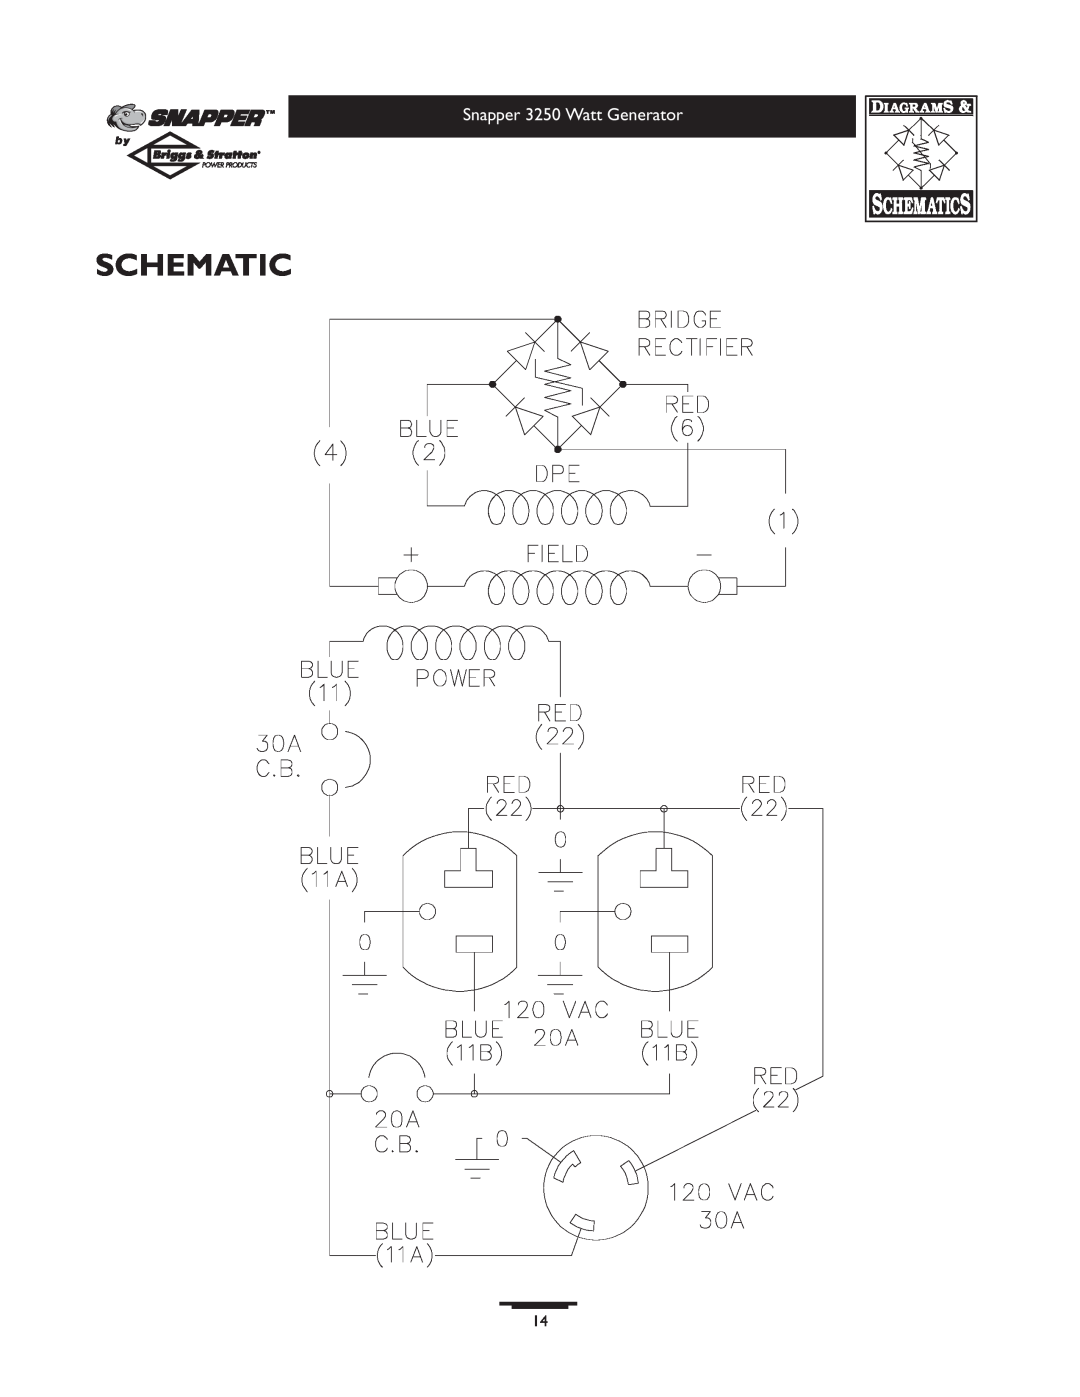 Snapper 1667-0 owner manual Schematic, Snapper 3250 Watt Generator 